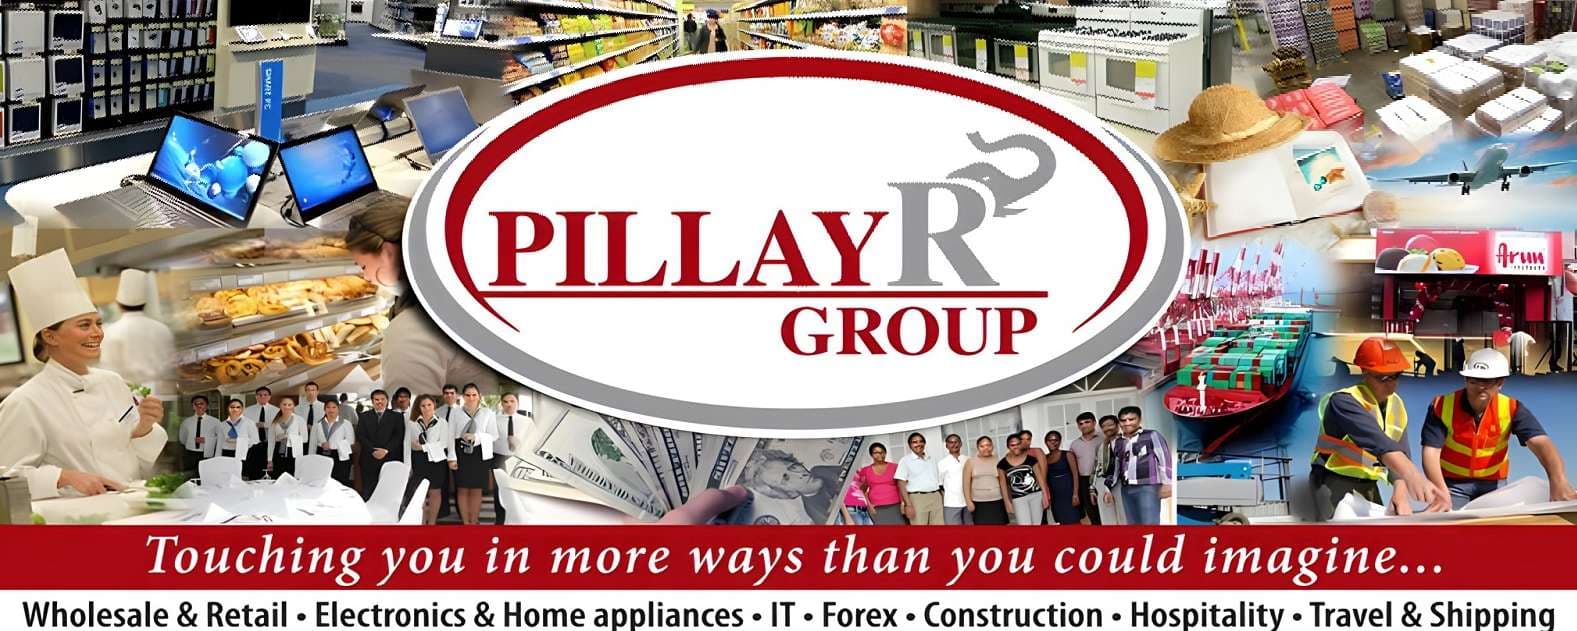 Pillay R Group - Electronics & Home Appliances